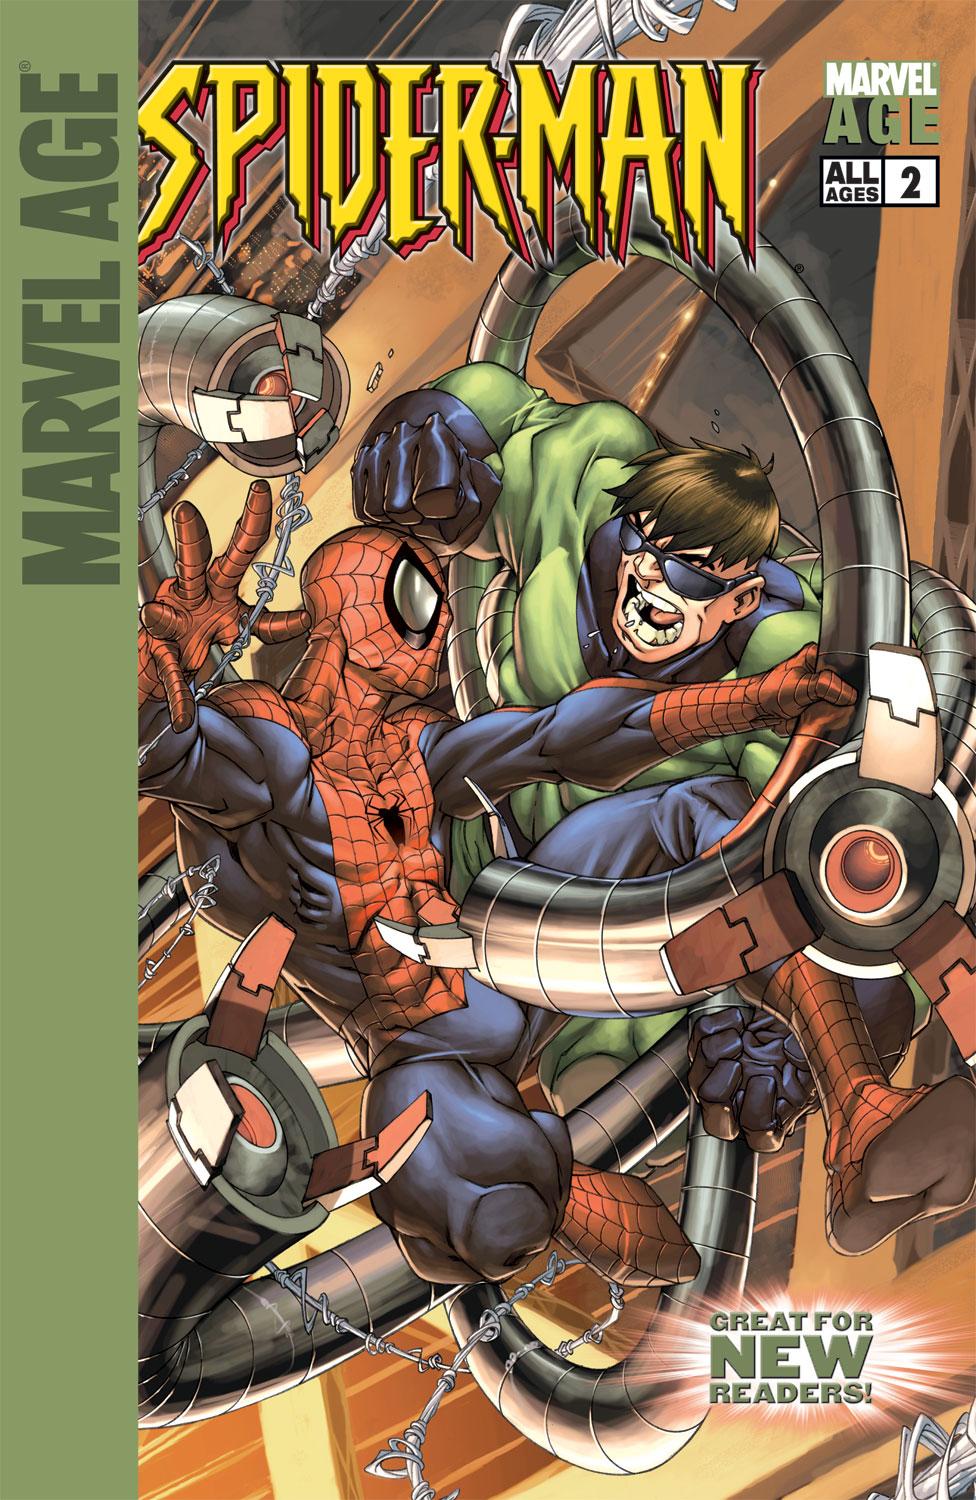 Marvel Age Spider-Man (2004) #2